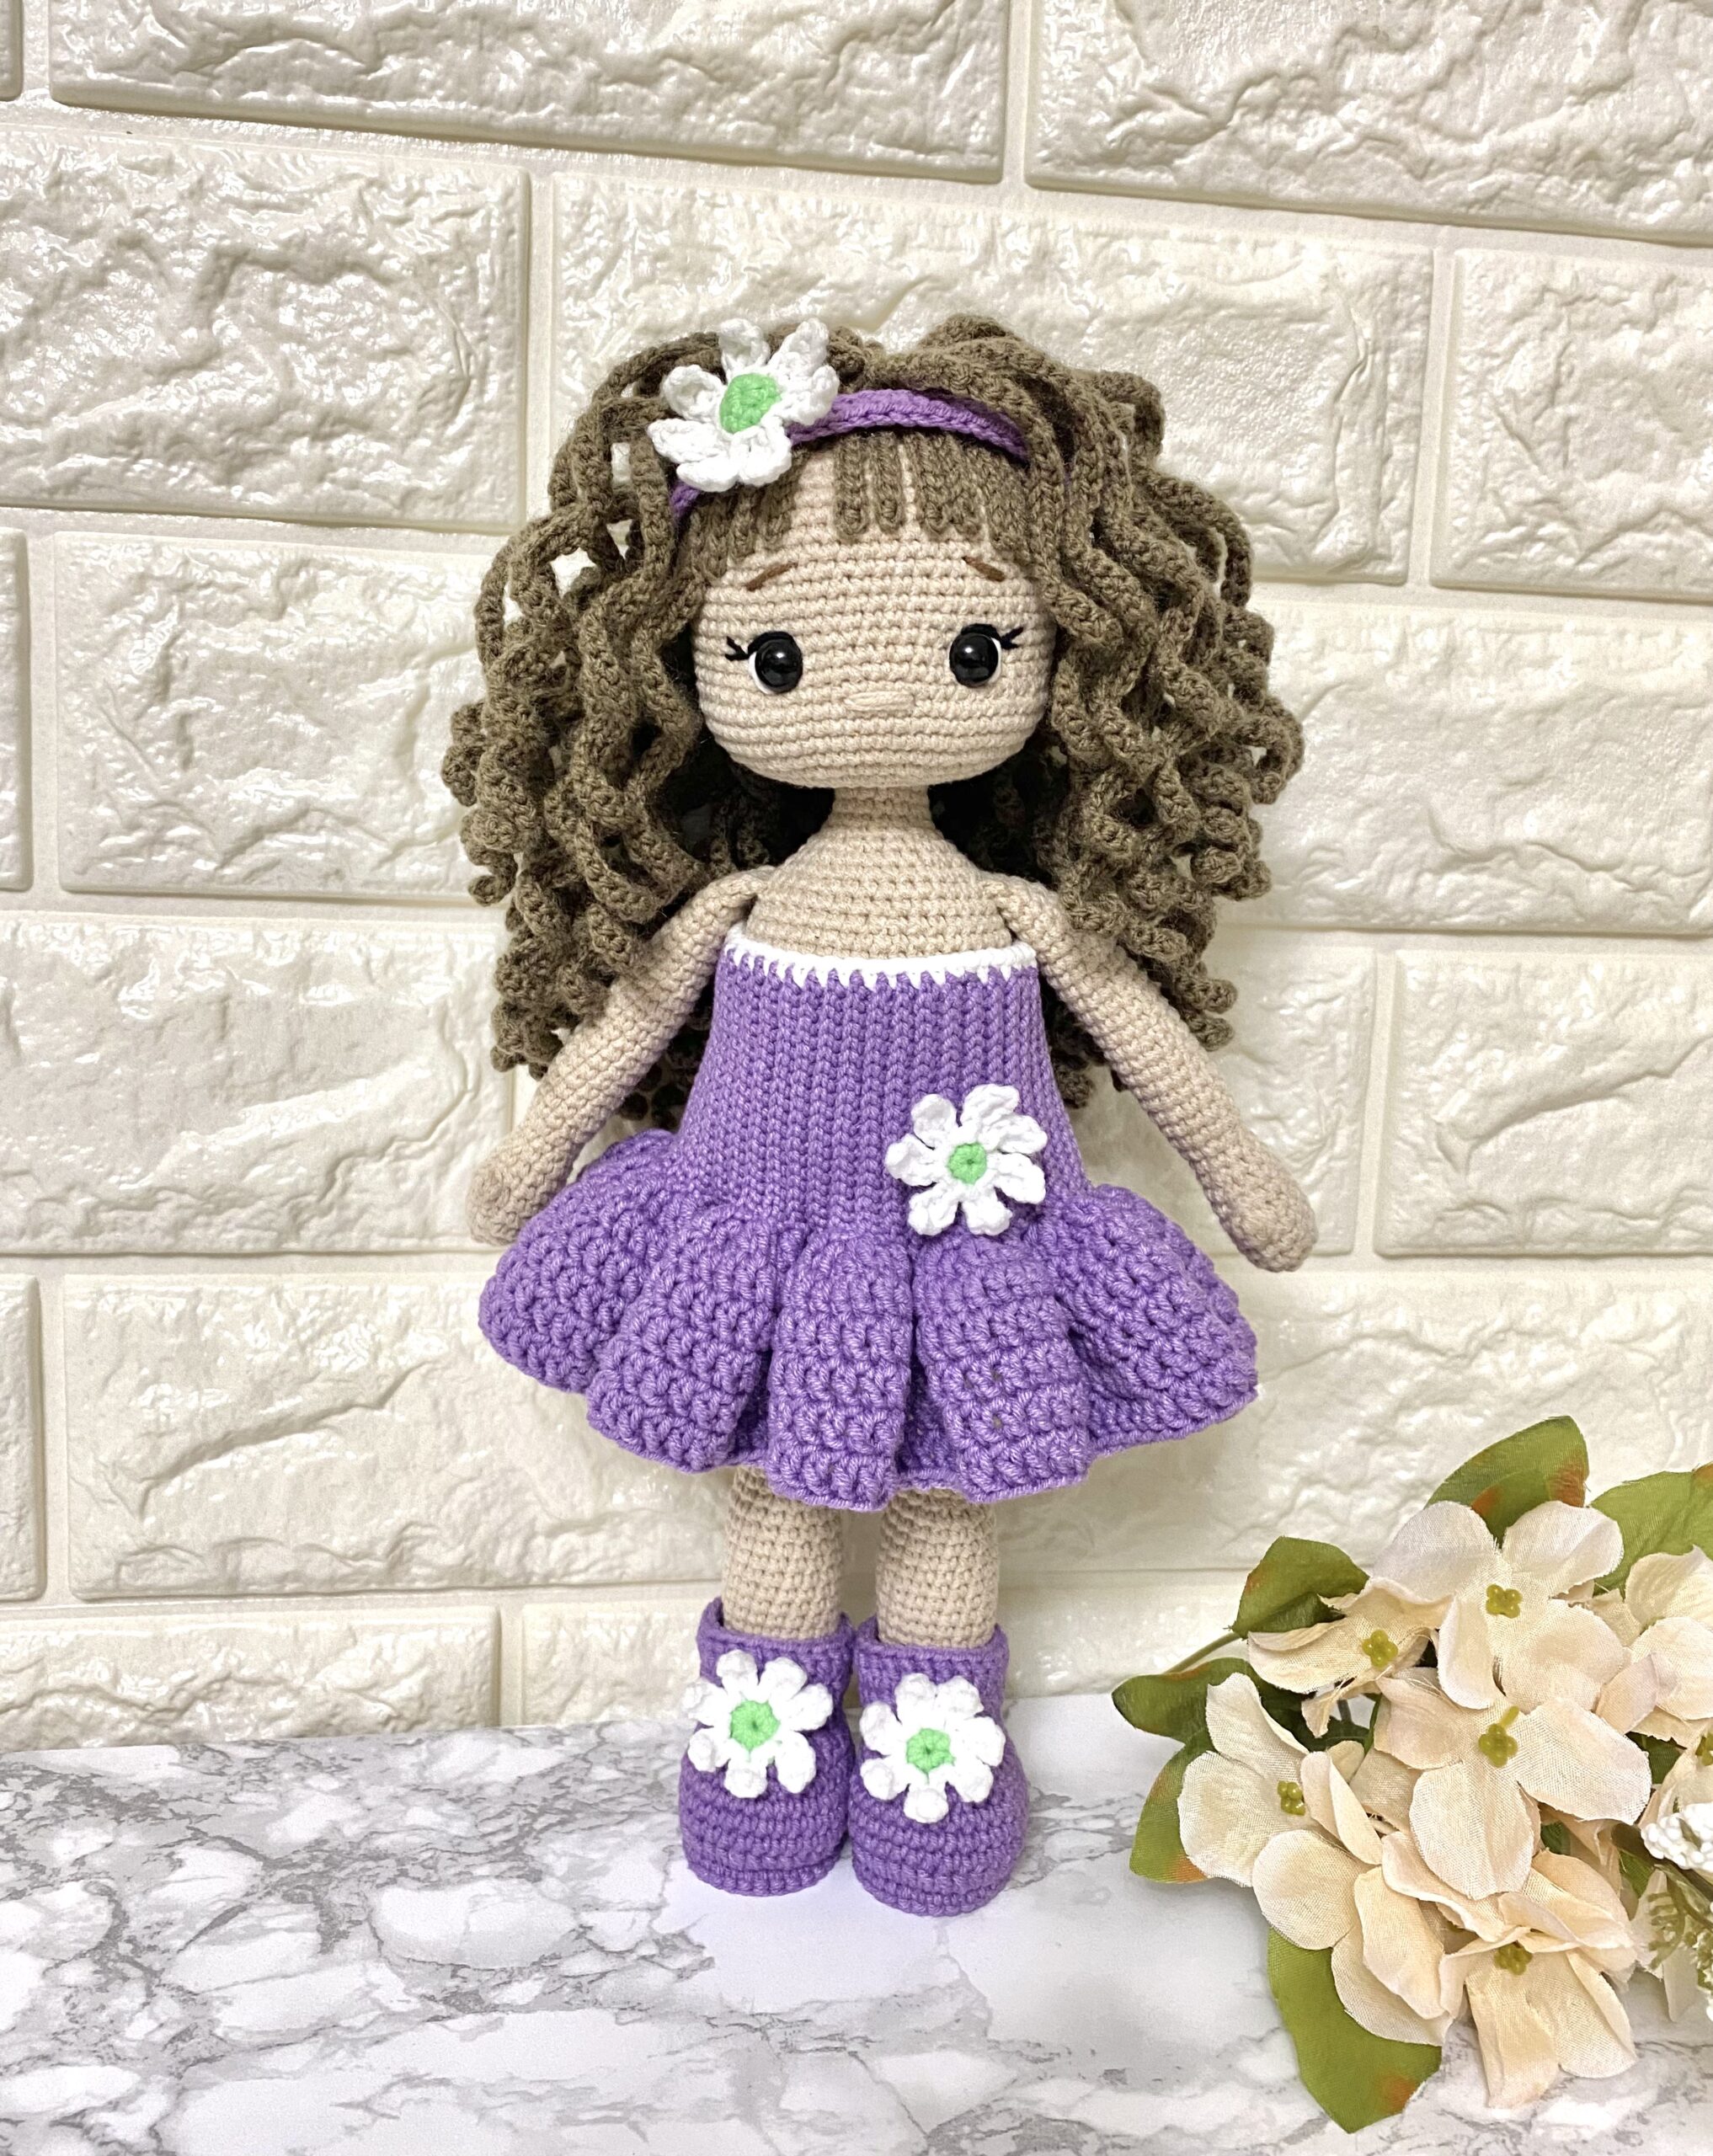 Crochet doll pattern, Amigurumi 9 inch doll in pink skirt